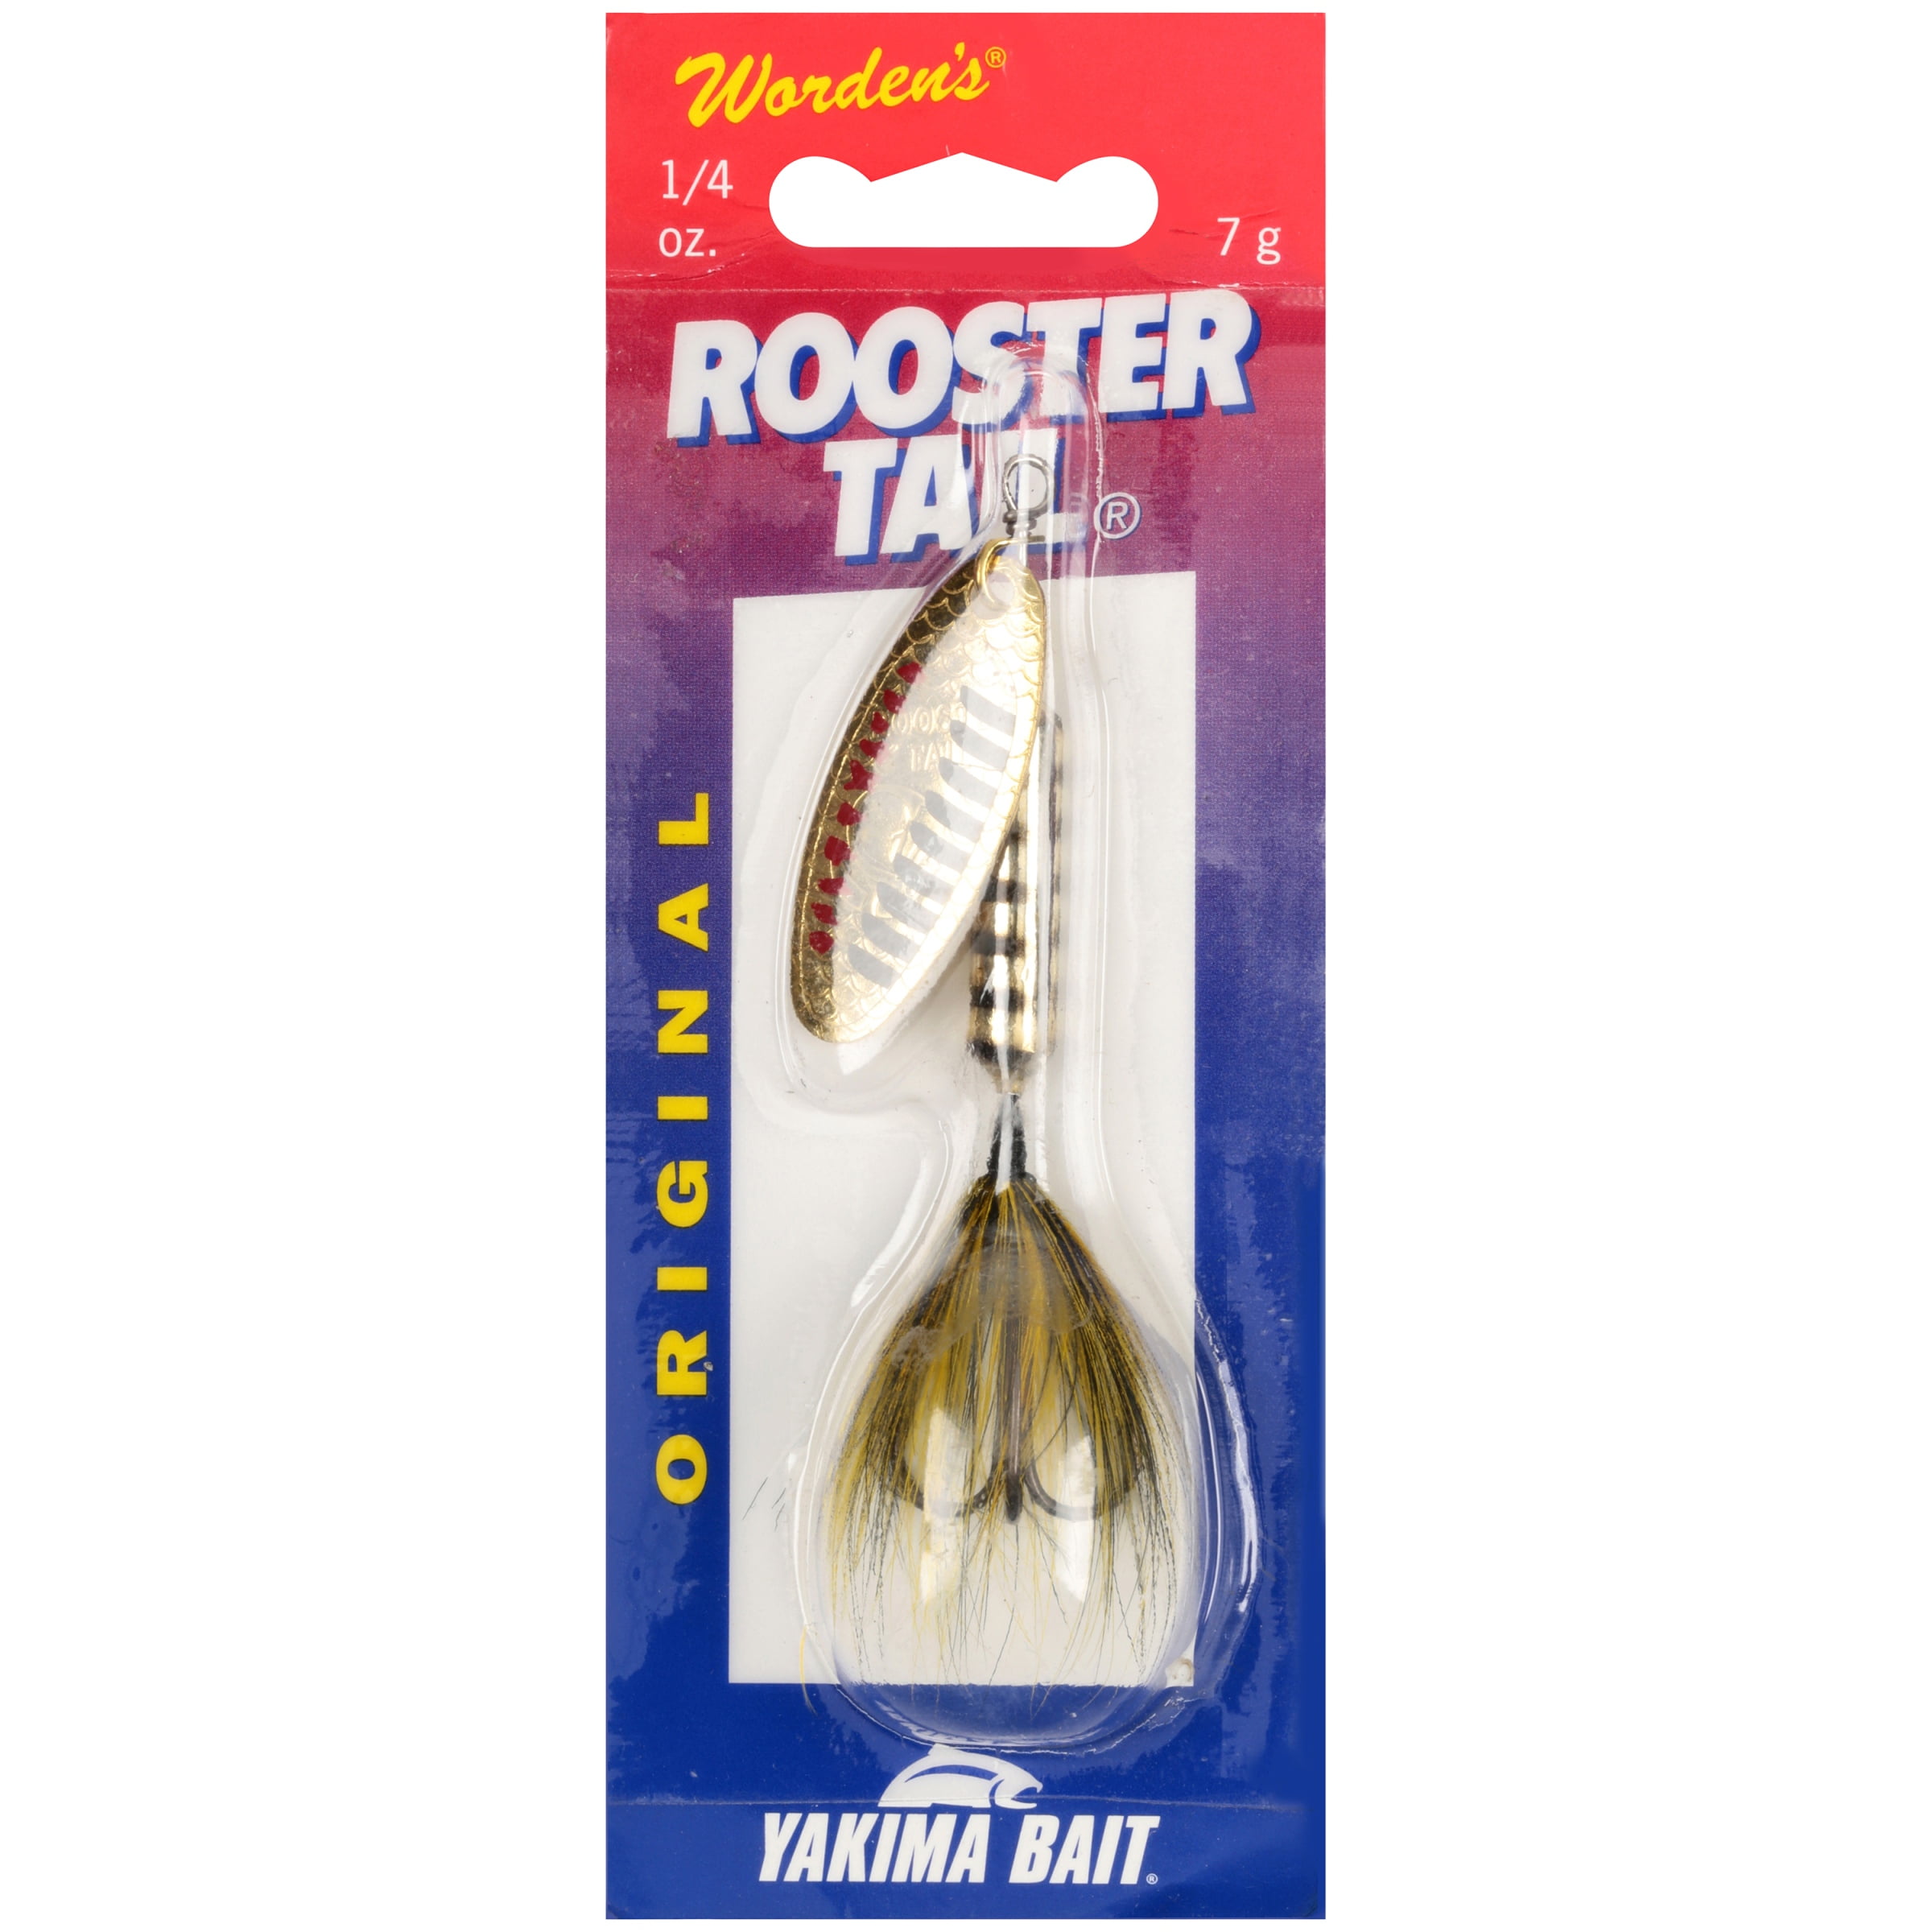 Worden's Original Rooster Tail - 1/4 oz. - Electric Chicken